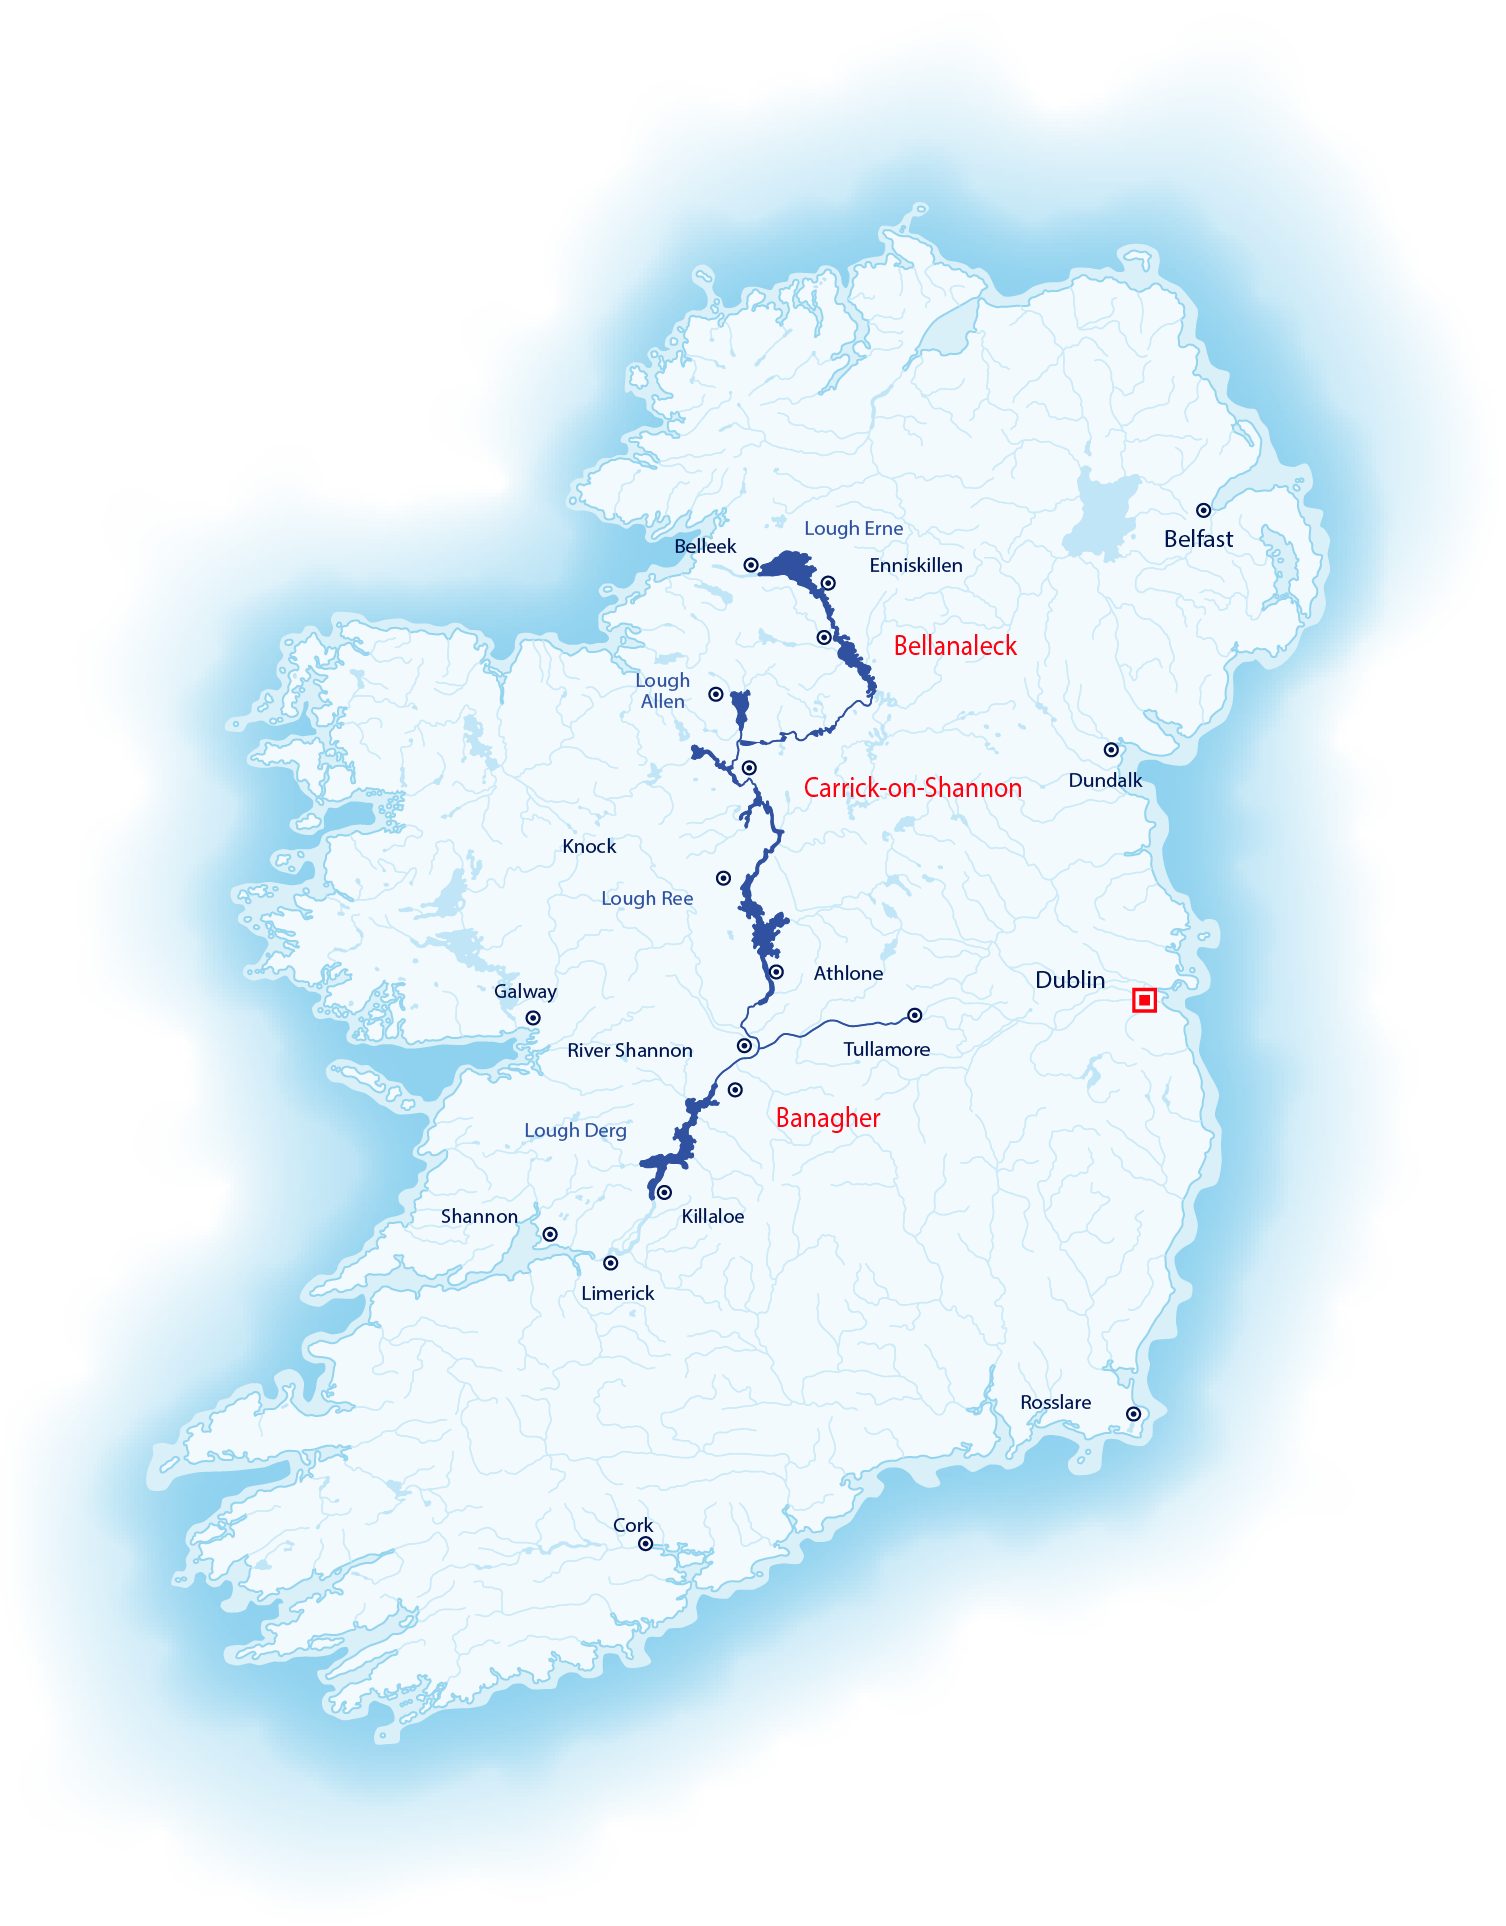 Navigation Map of Ireland